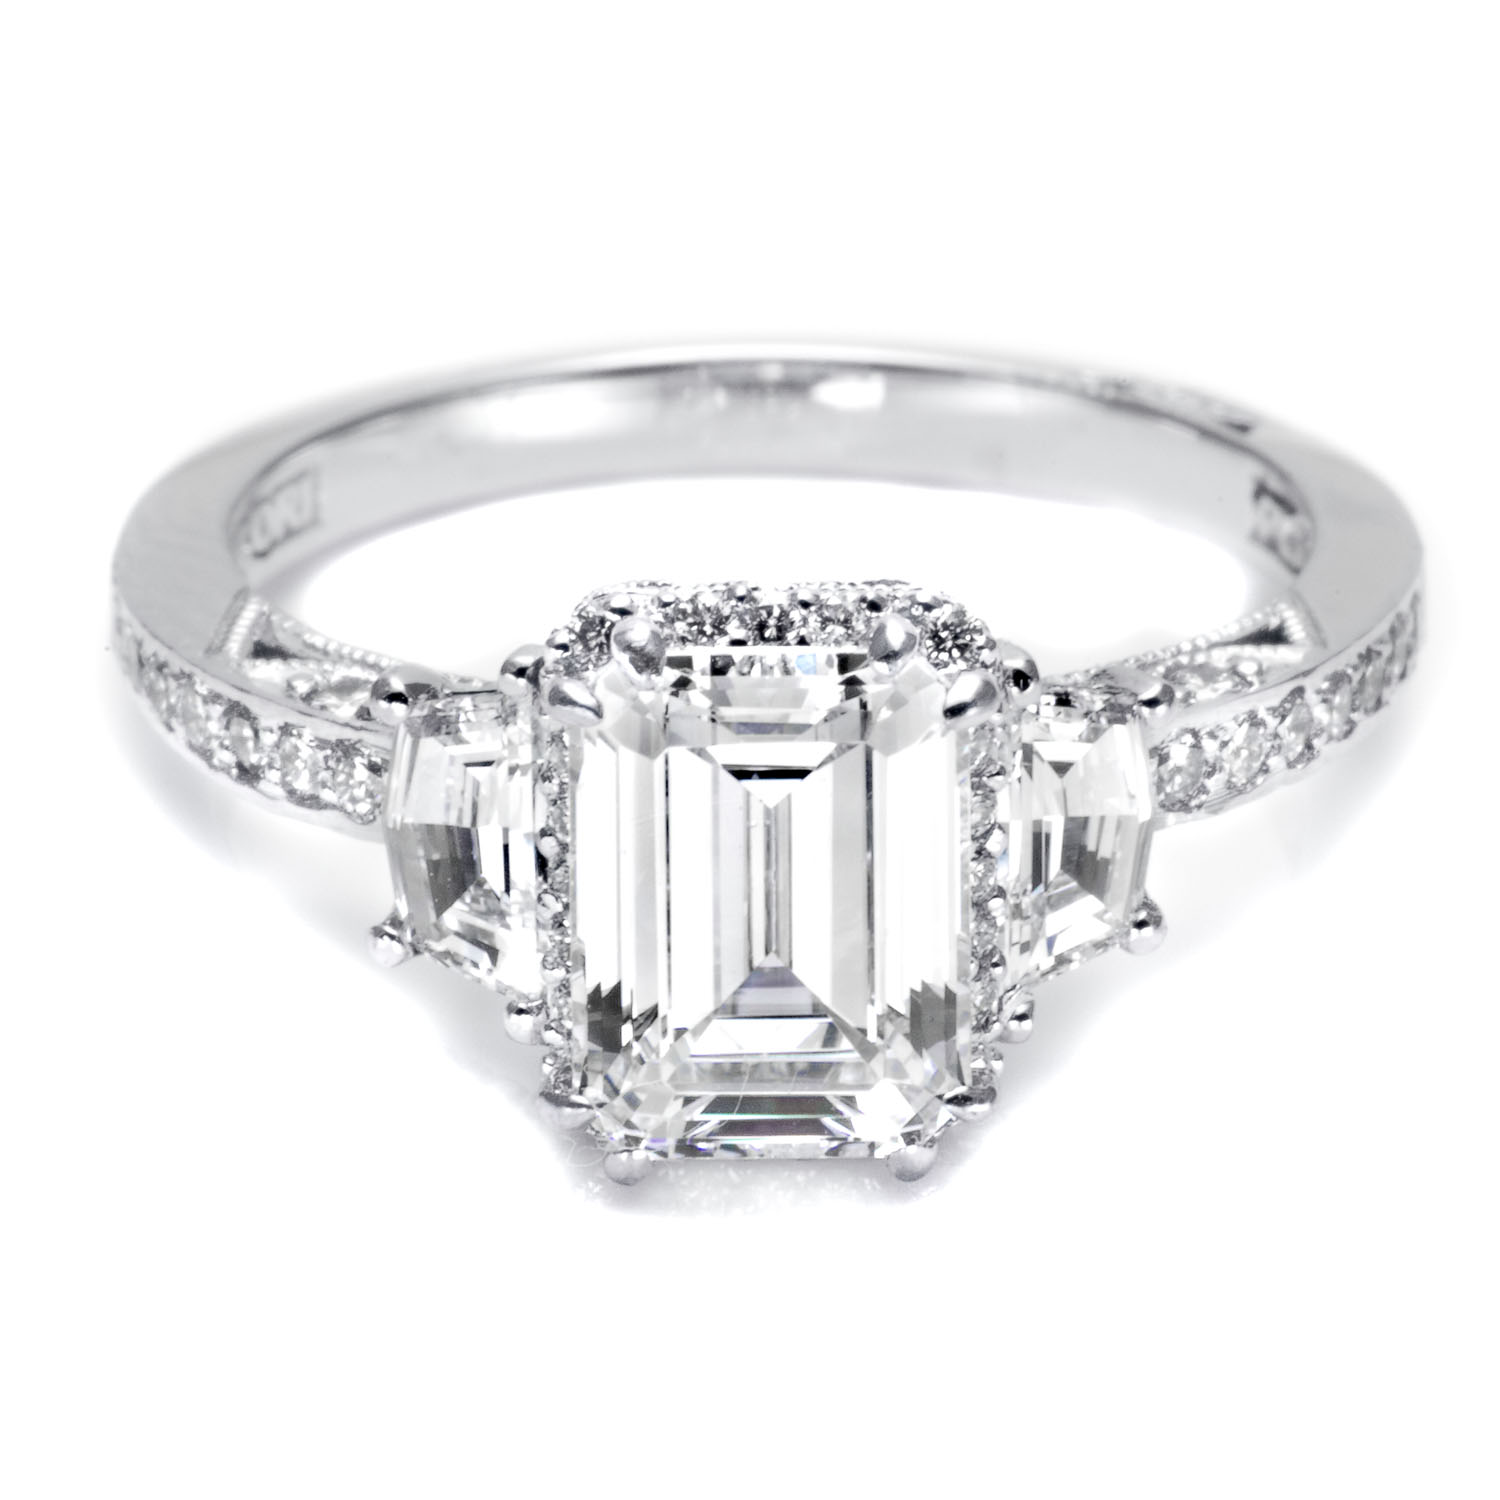 Emerald cut engagement rings